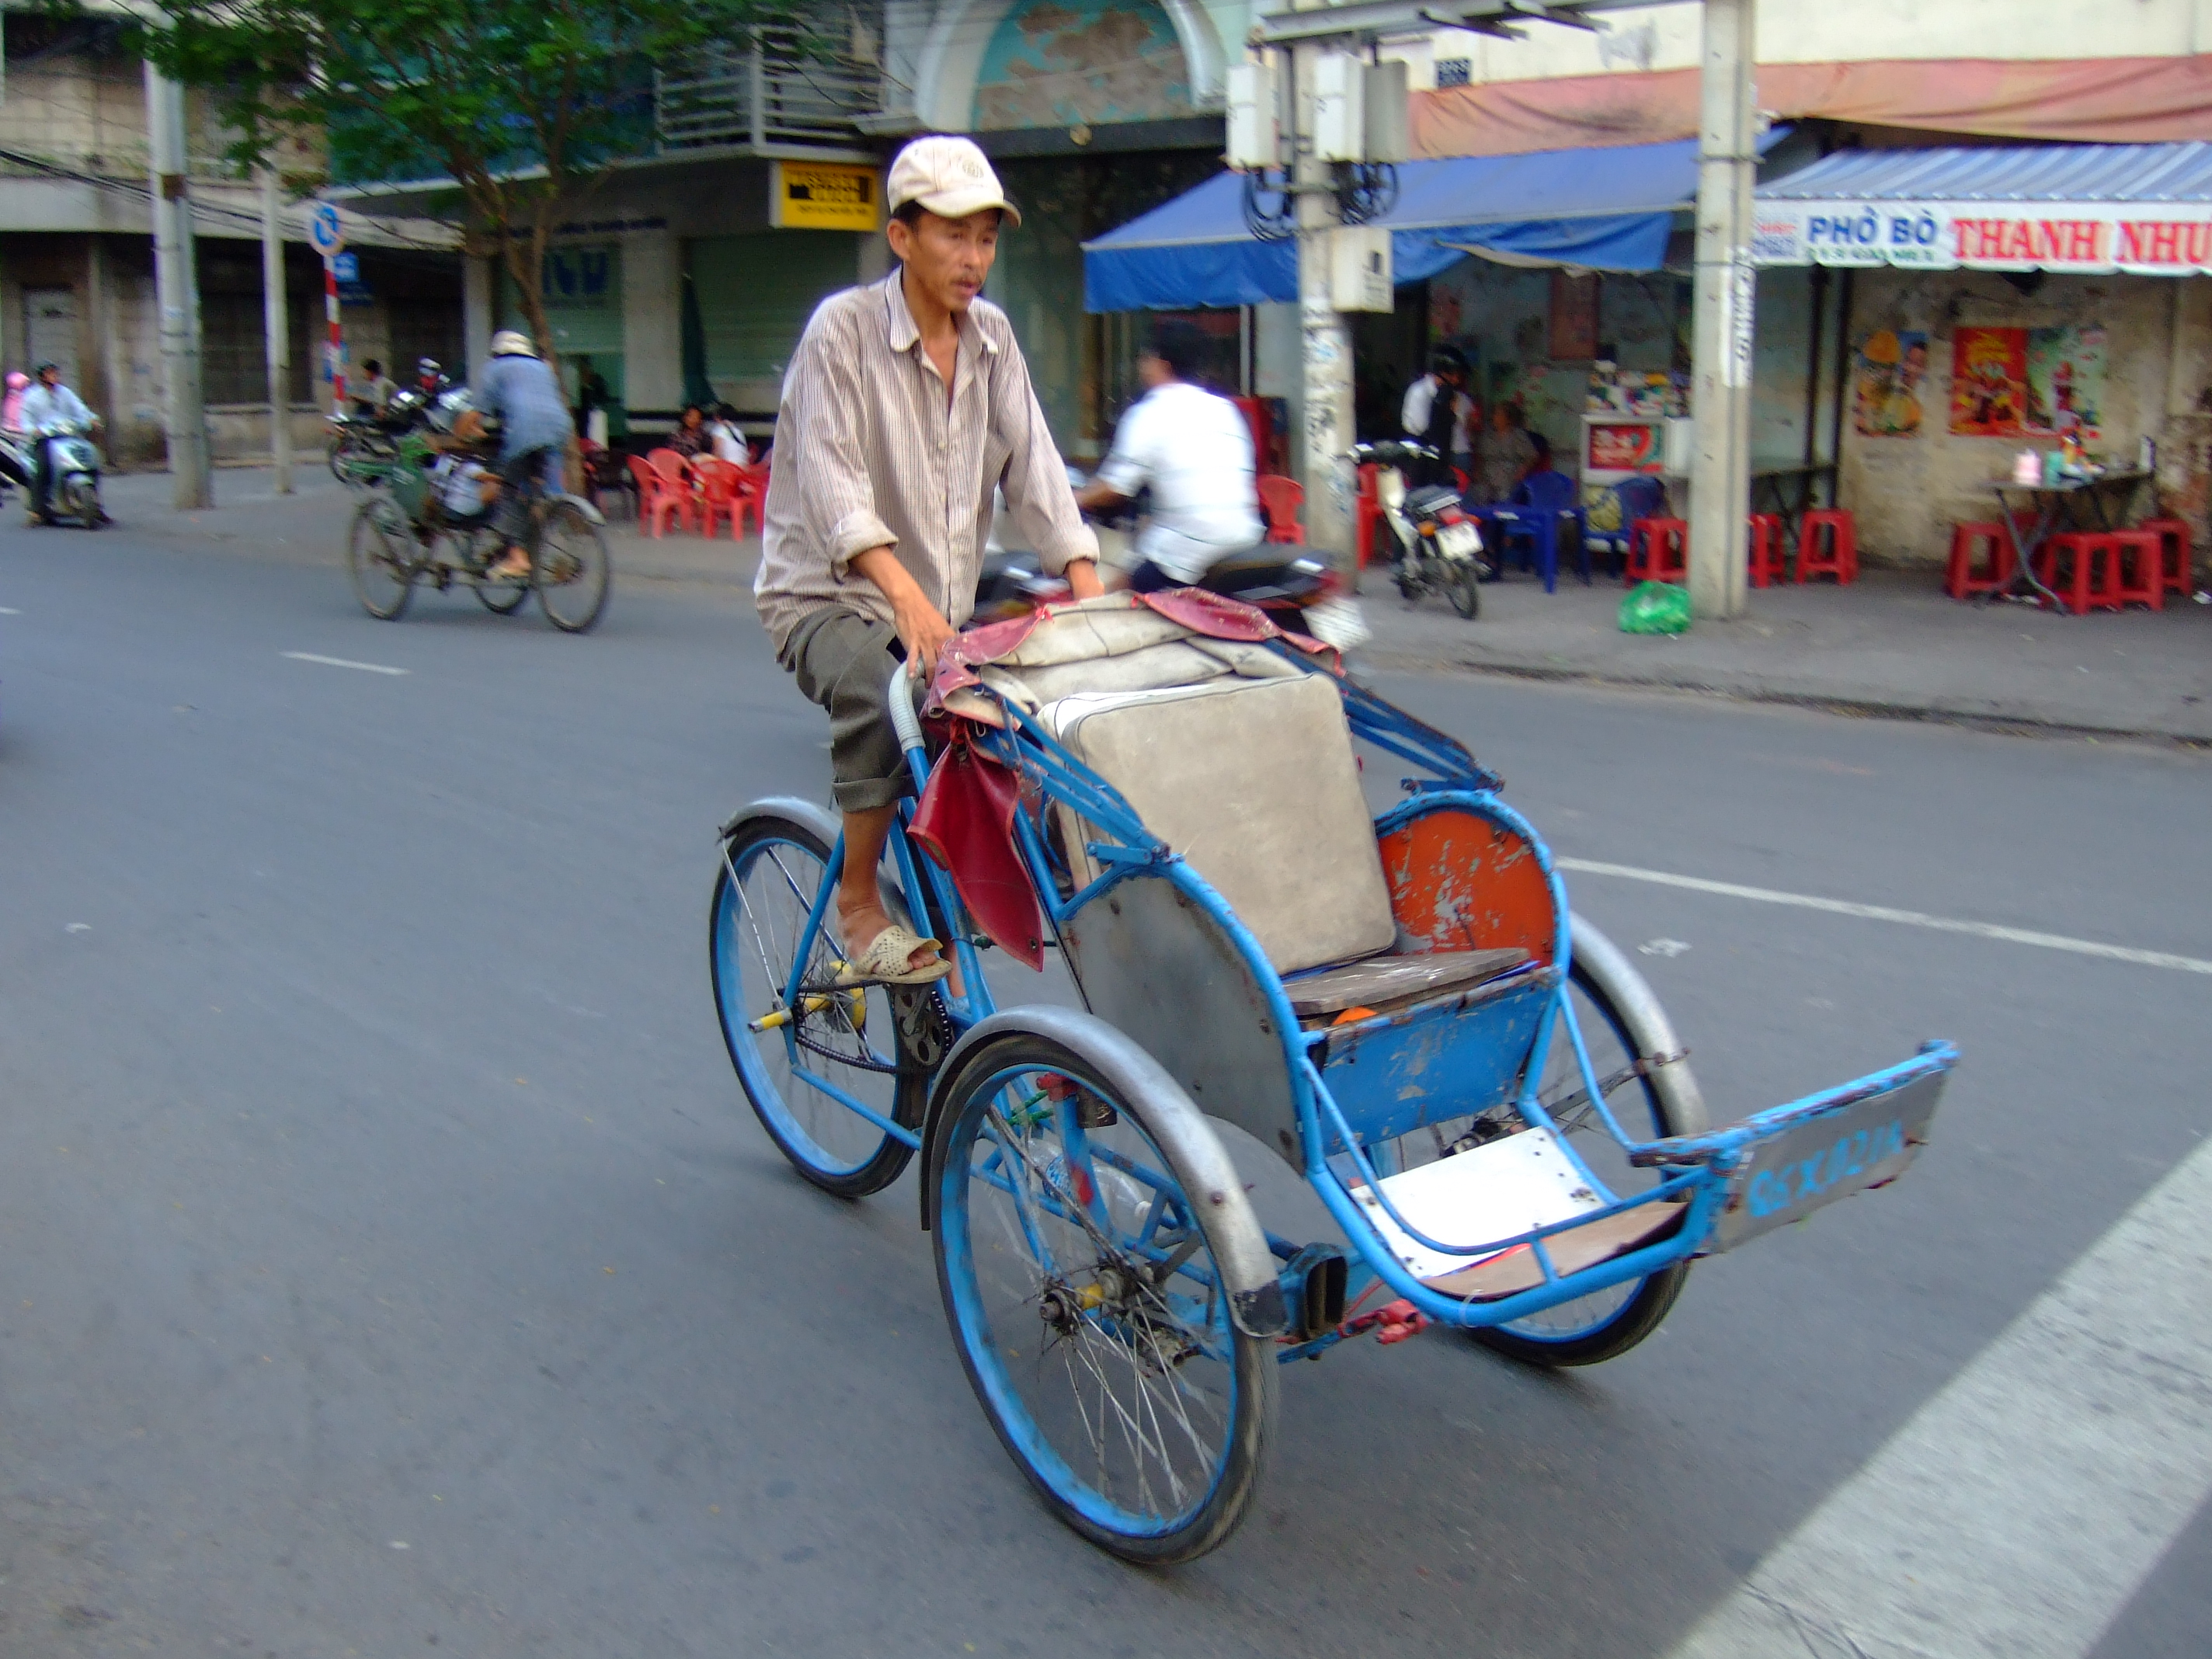 Vietnam Ho Chi Minh City street scenes push bikes Feb 2009 001